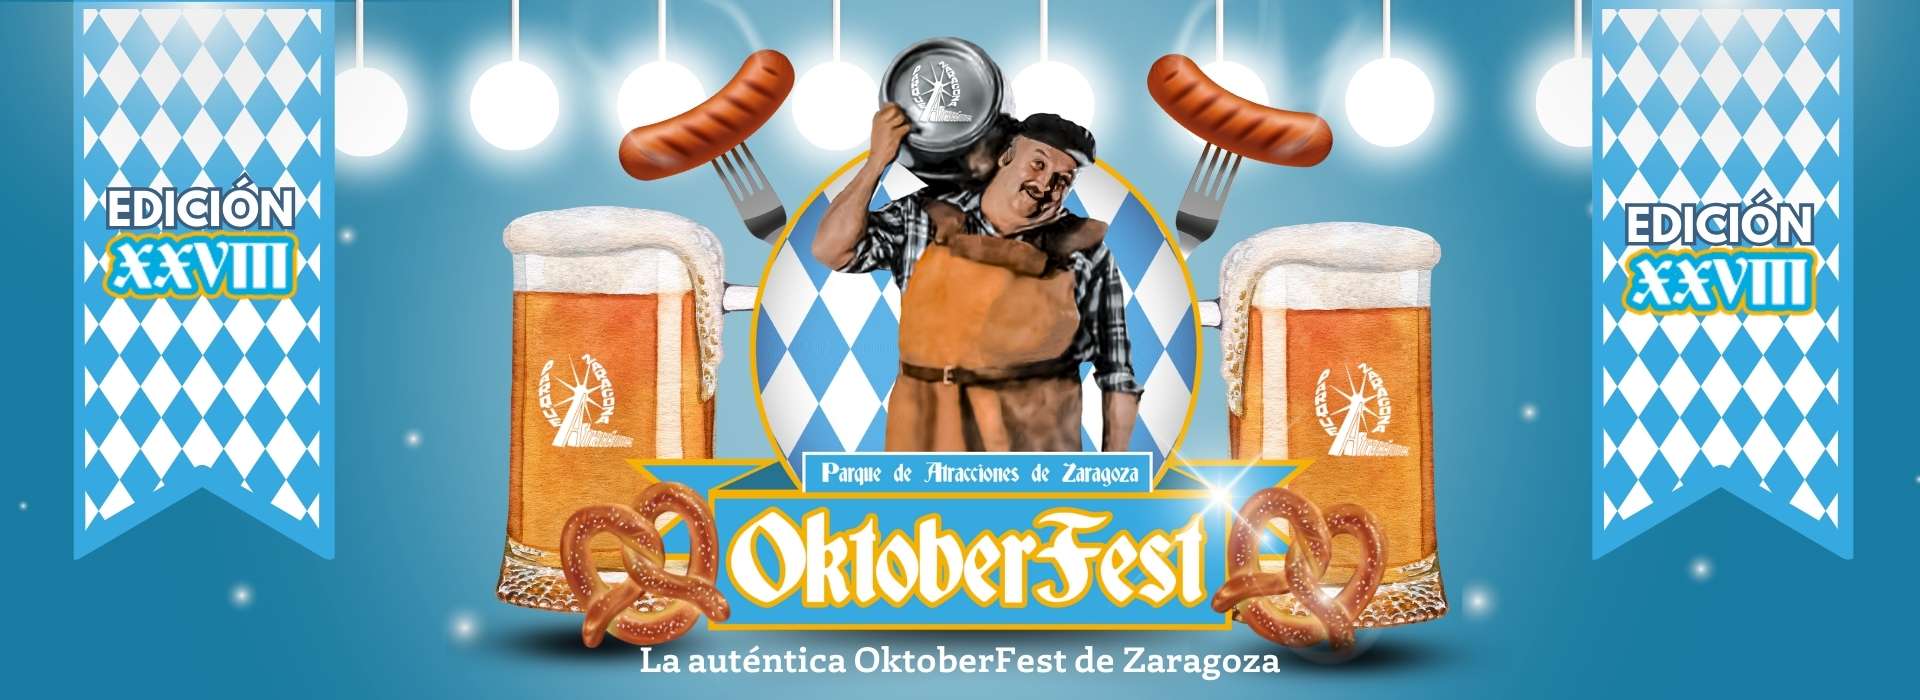 Oktoberfest parque de atracciones zaragoza